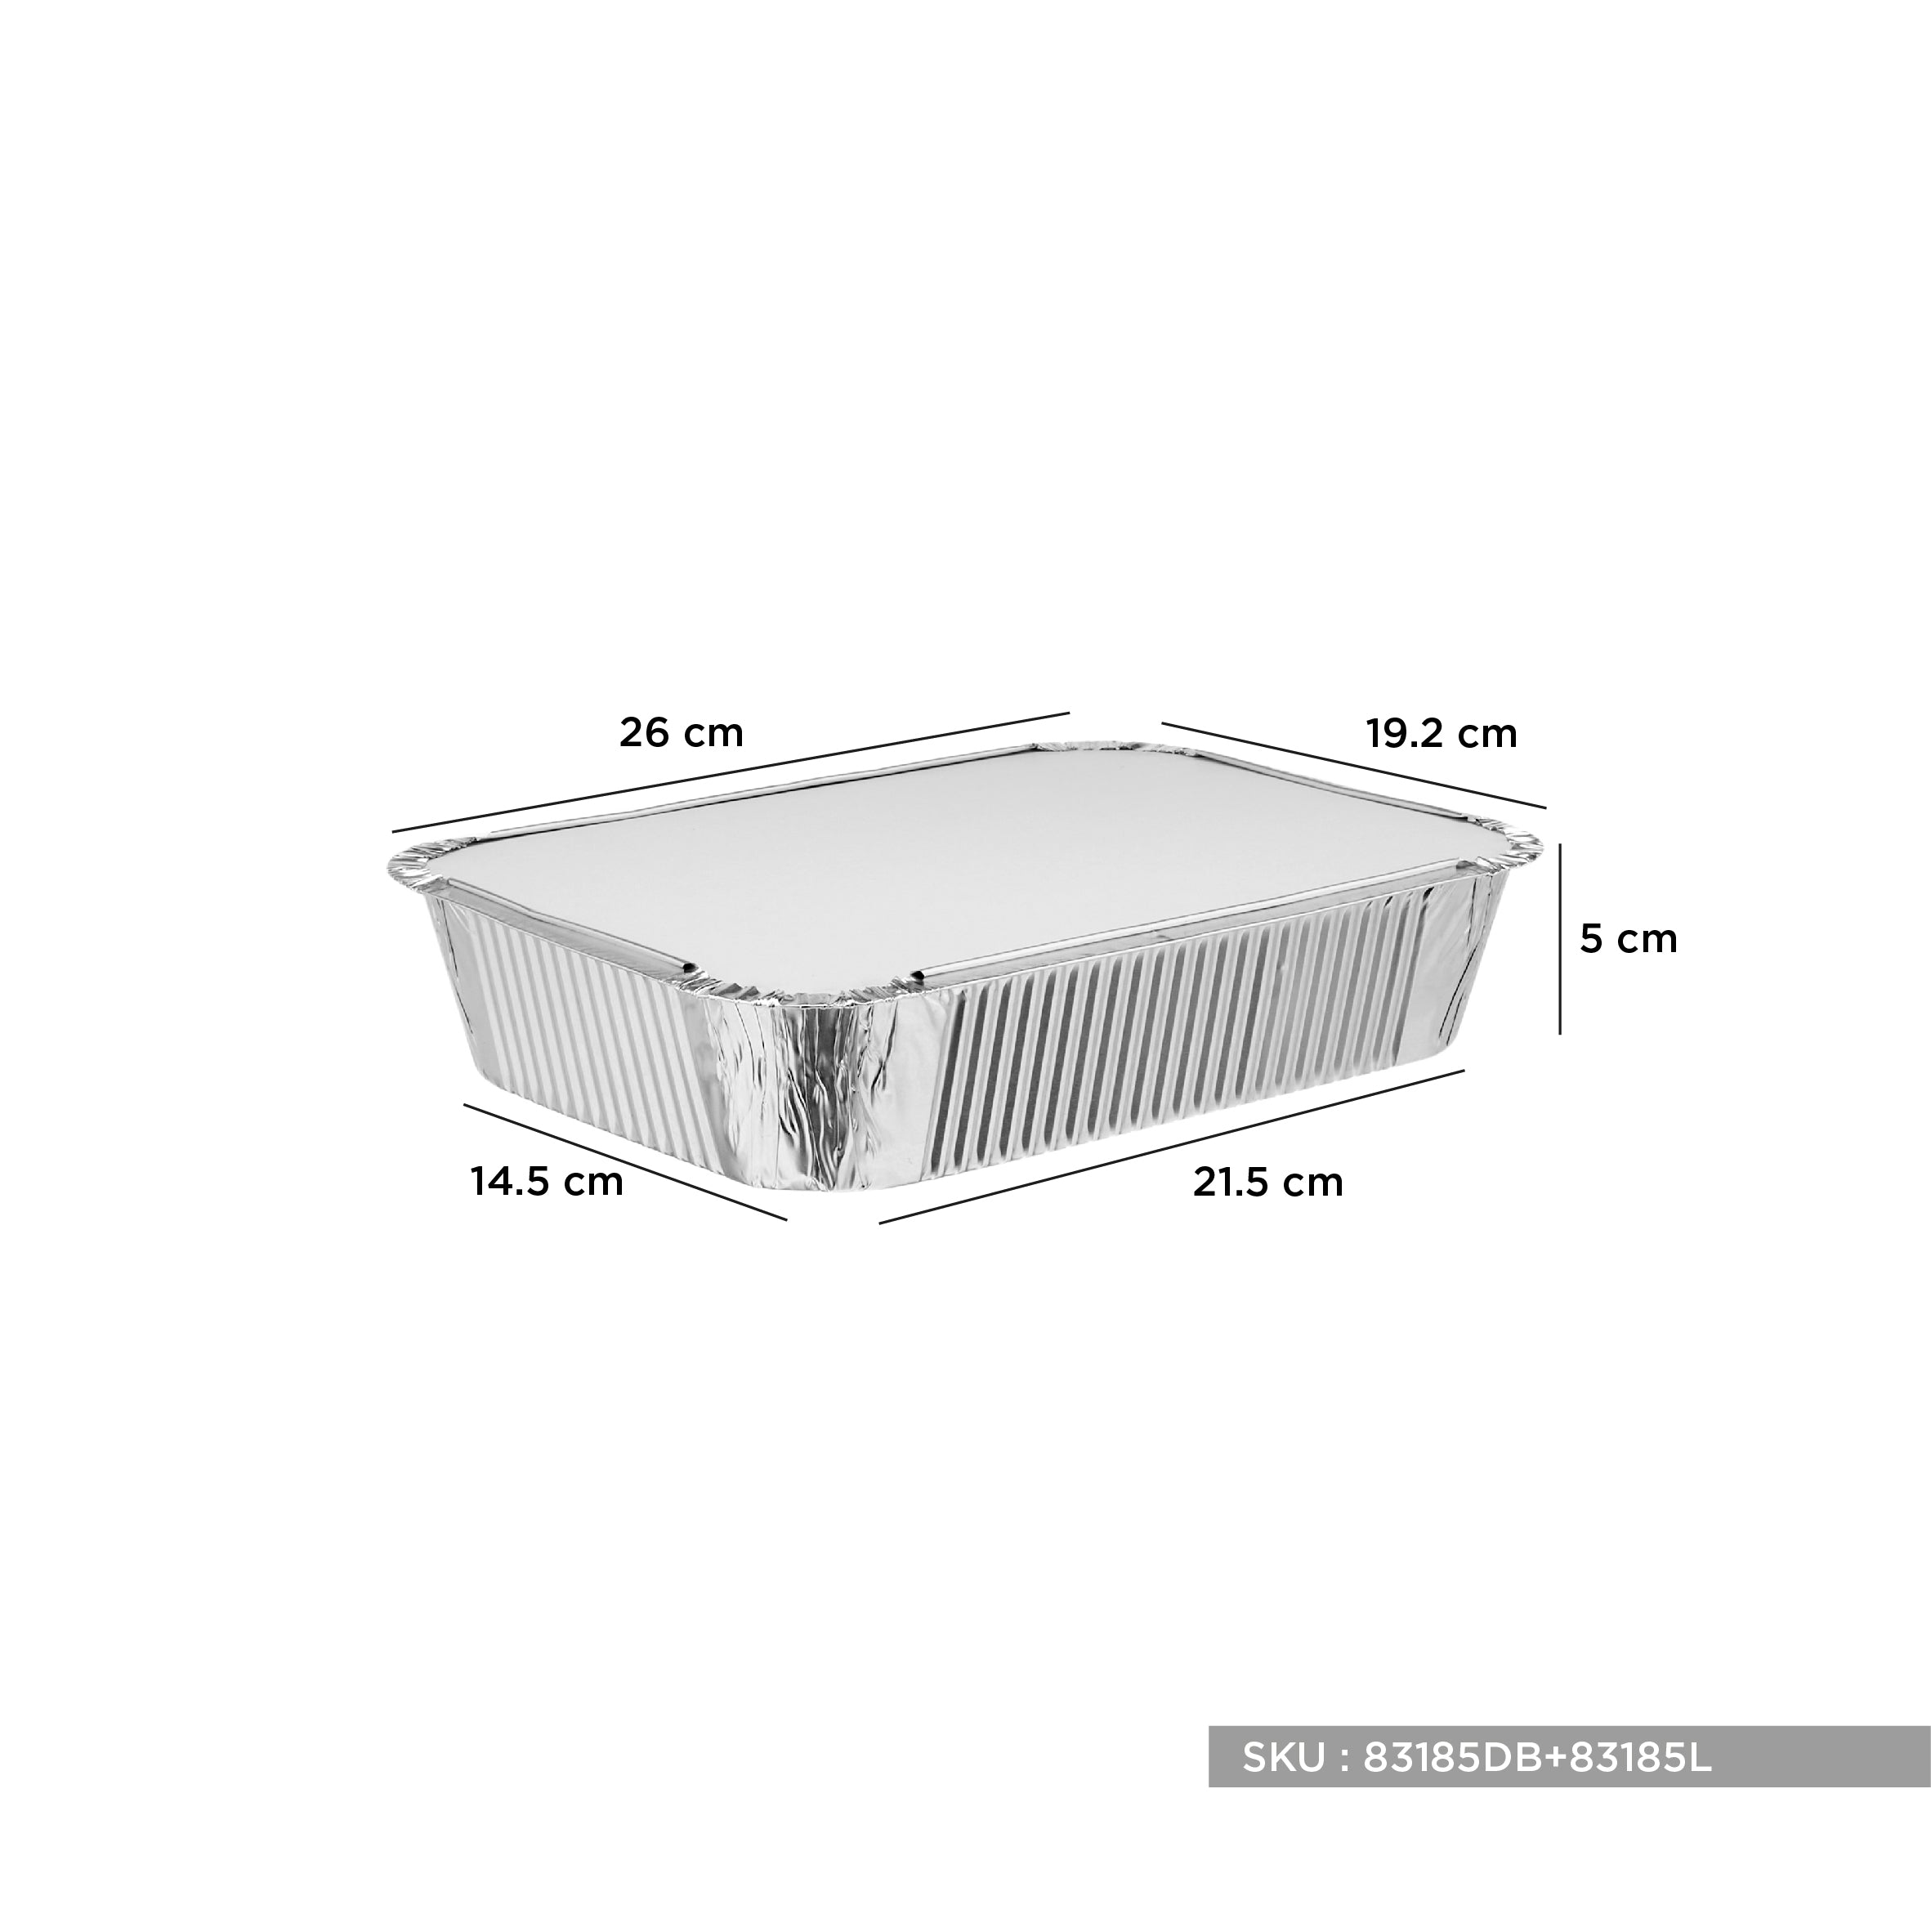 83185 Aluminum food container - Hotpack Global